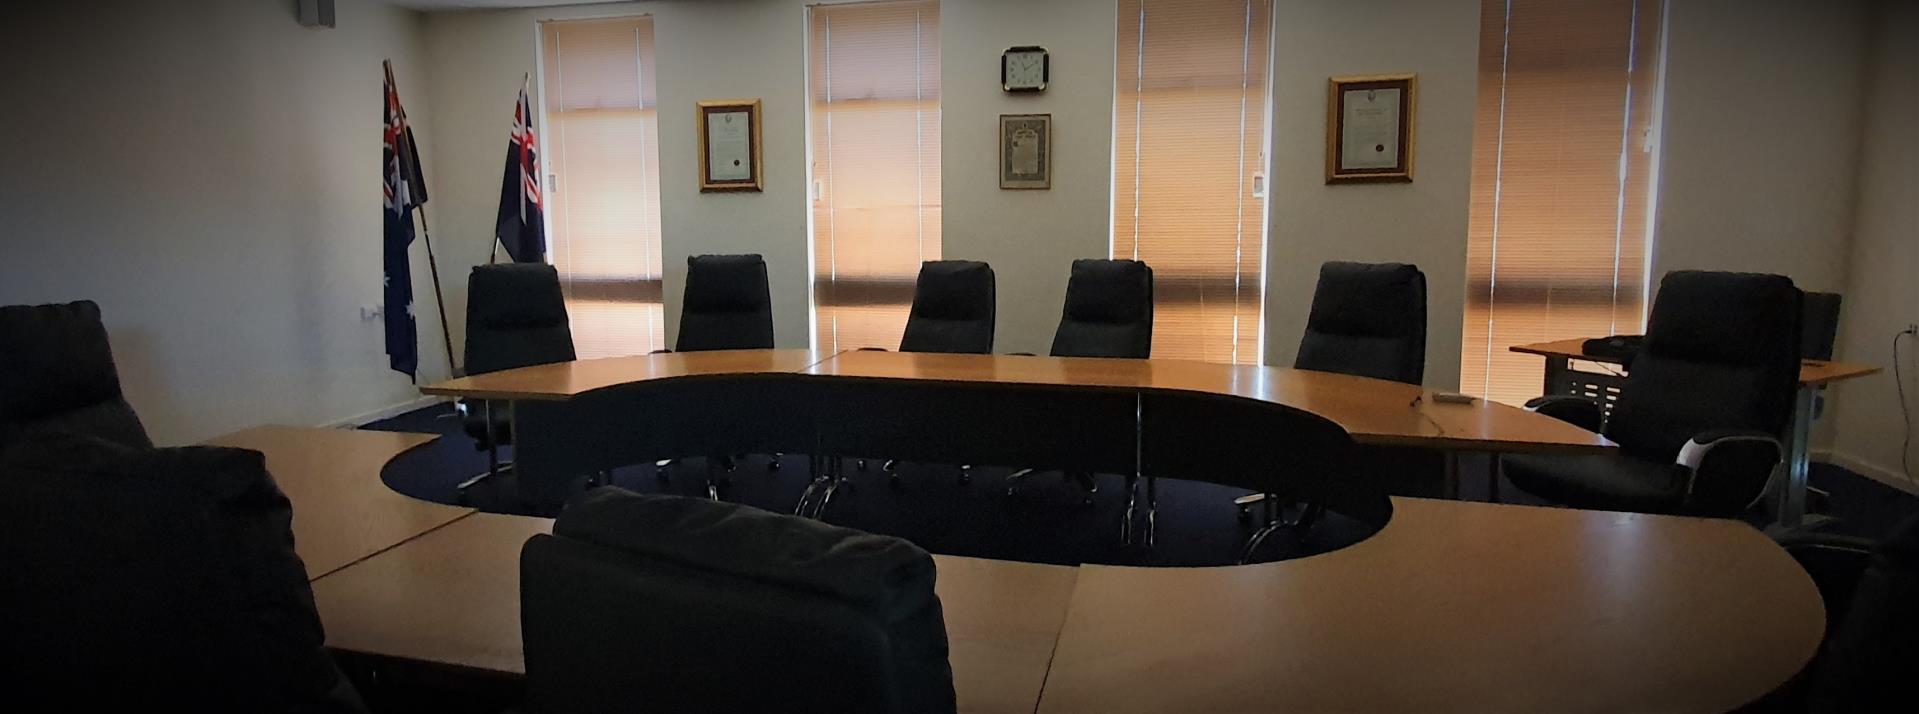 Ordinary Council Meetings